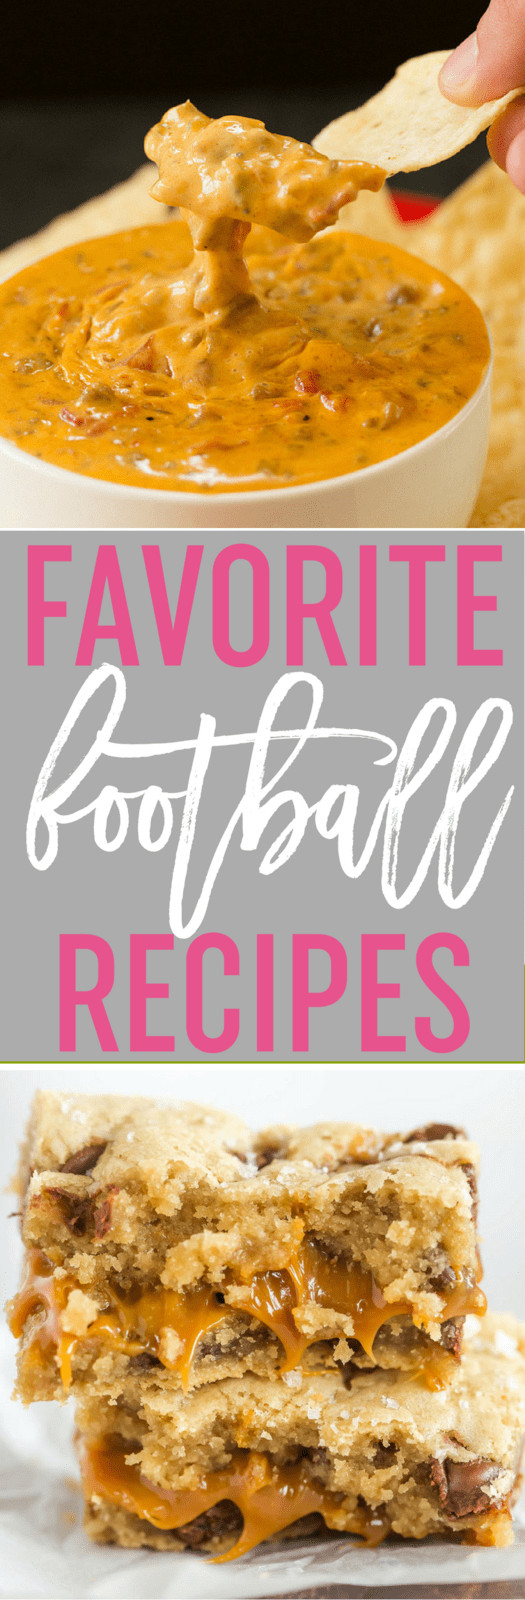 Football Snacks Recipes
 80 of My Favorite Football Food Recipes